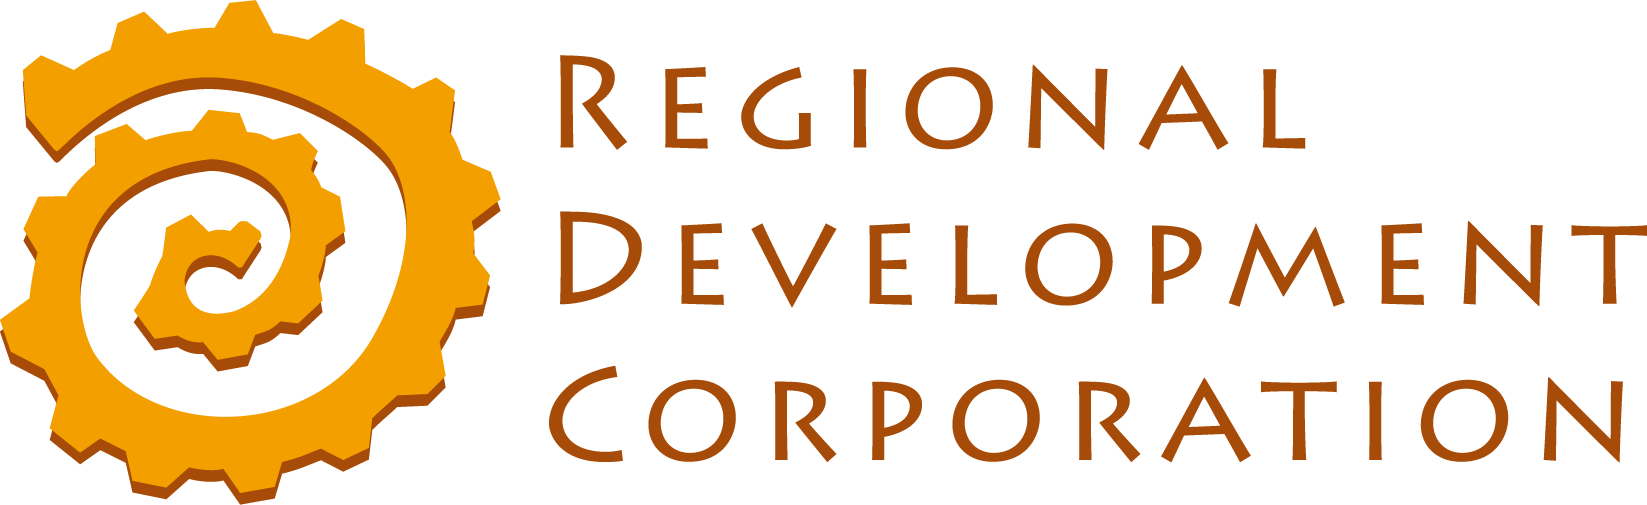 Regional Development Corporation (RDC) logo